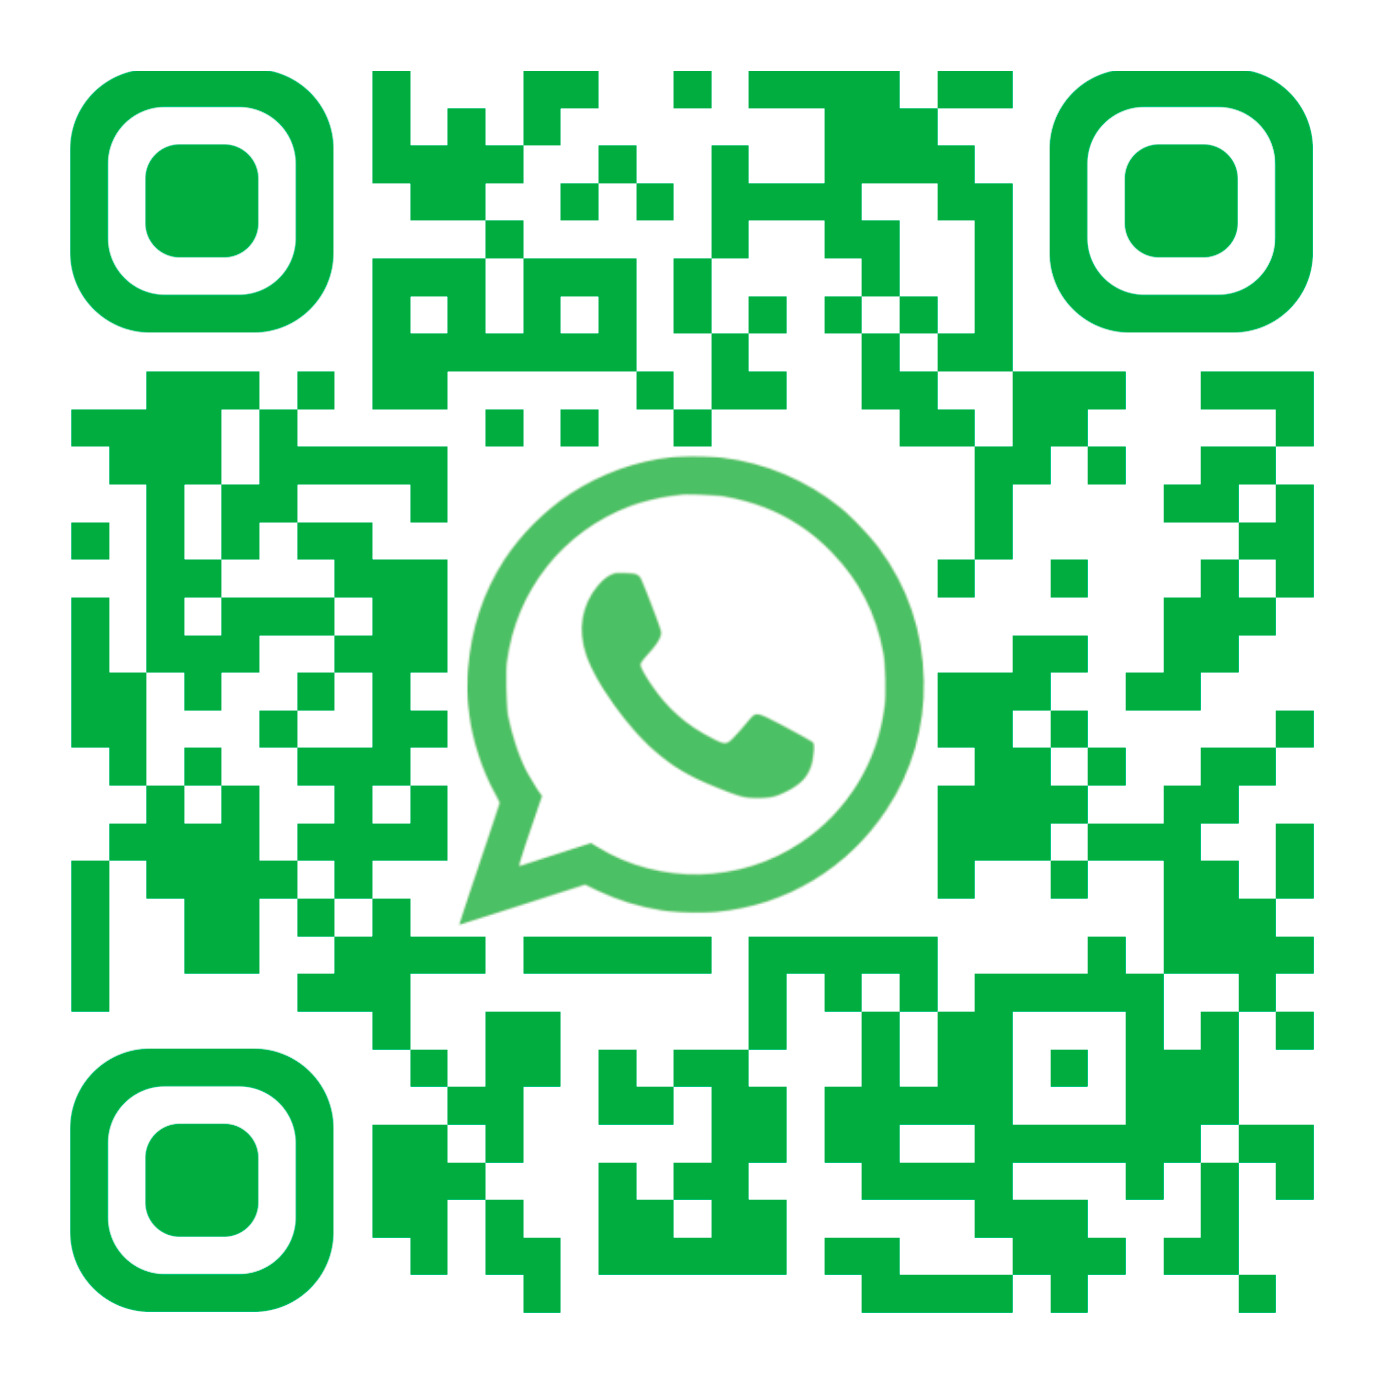 Whatsapp Business Web Qr Code / Businesses can add a qr code anywhere